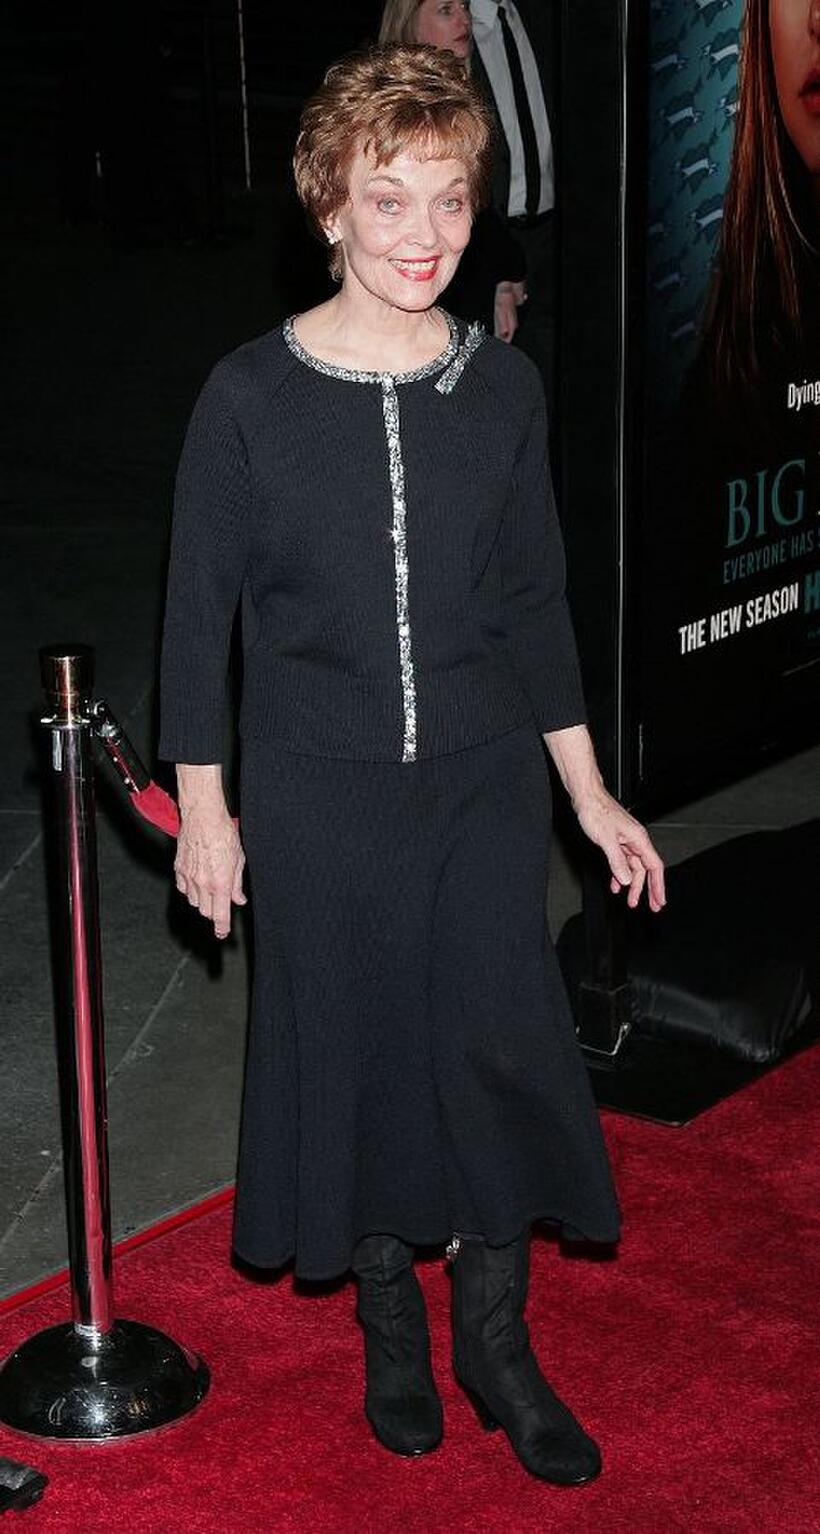 Grace Zabriskie at the premiere of "Big Love" 3rd season.